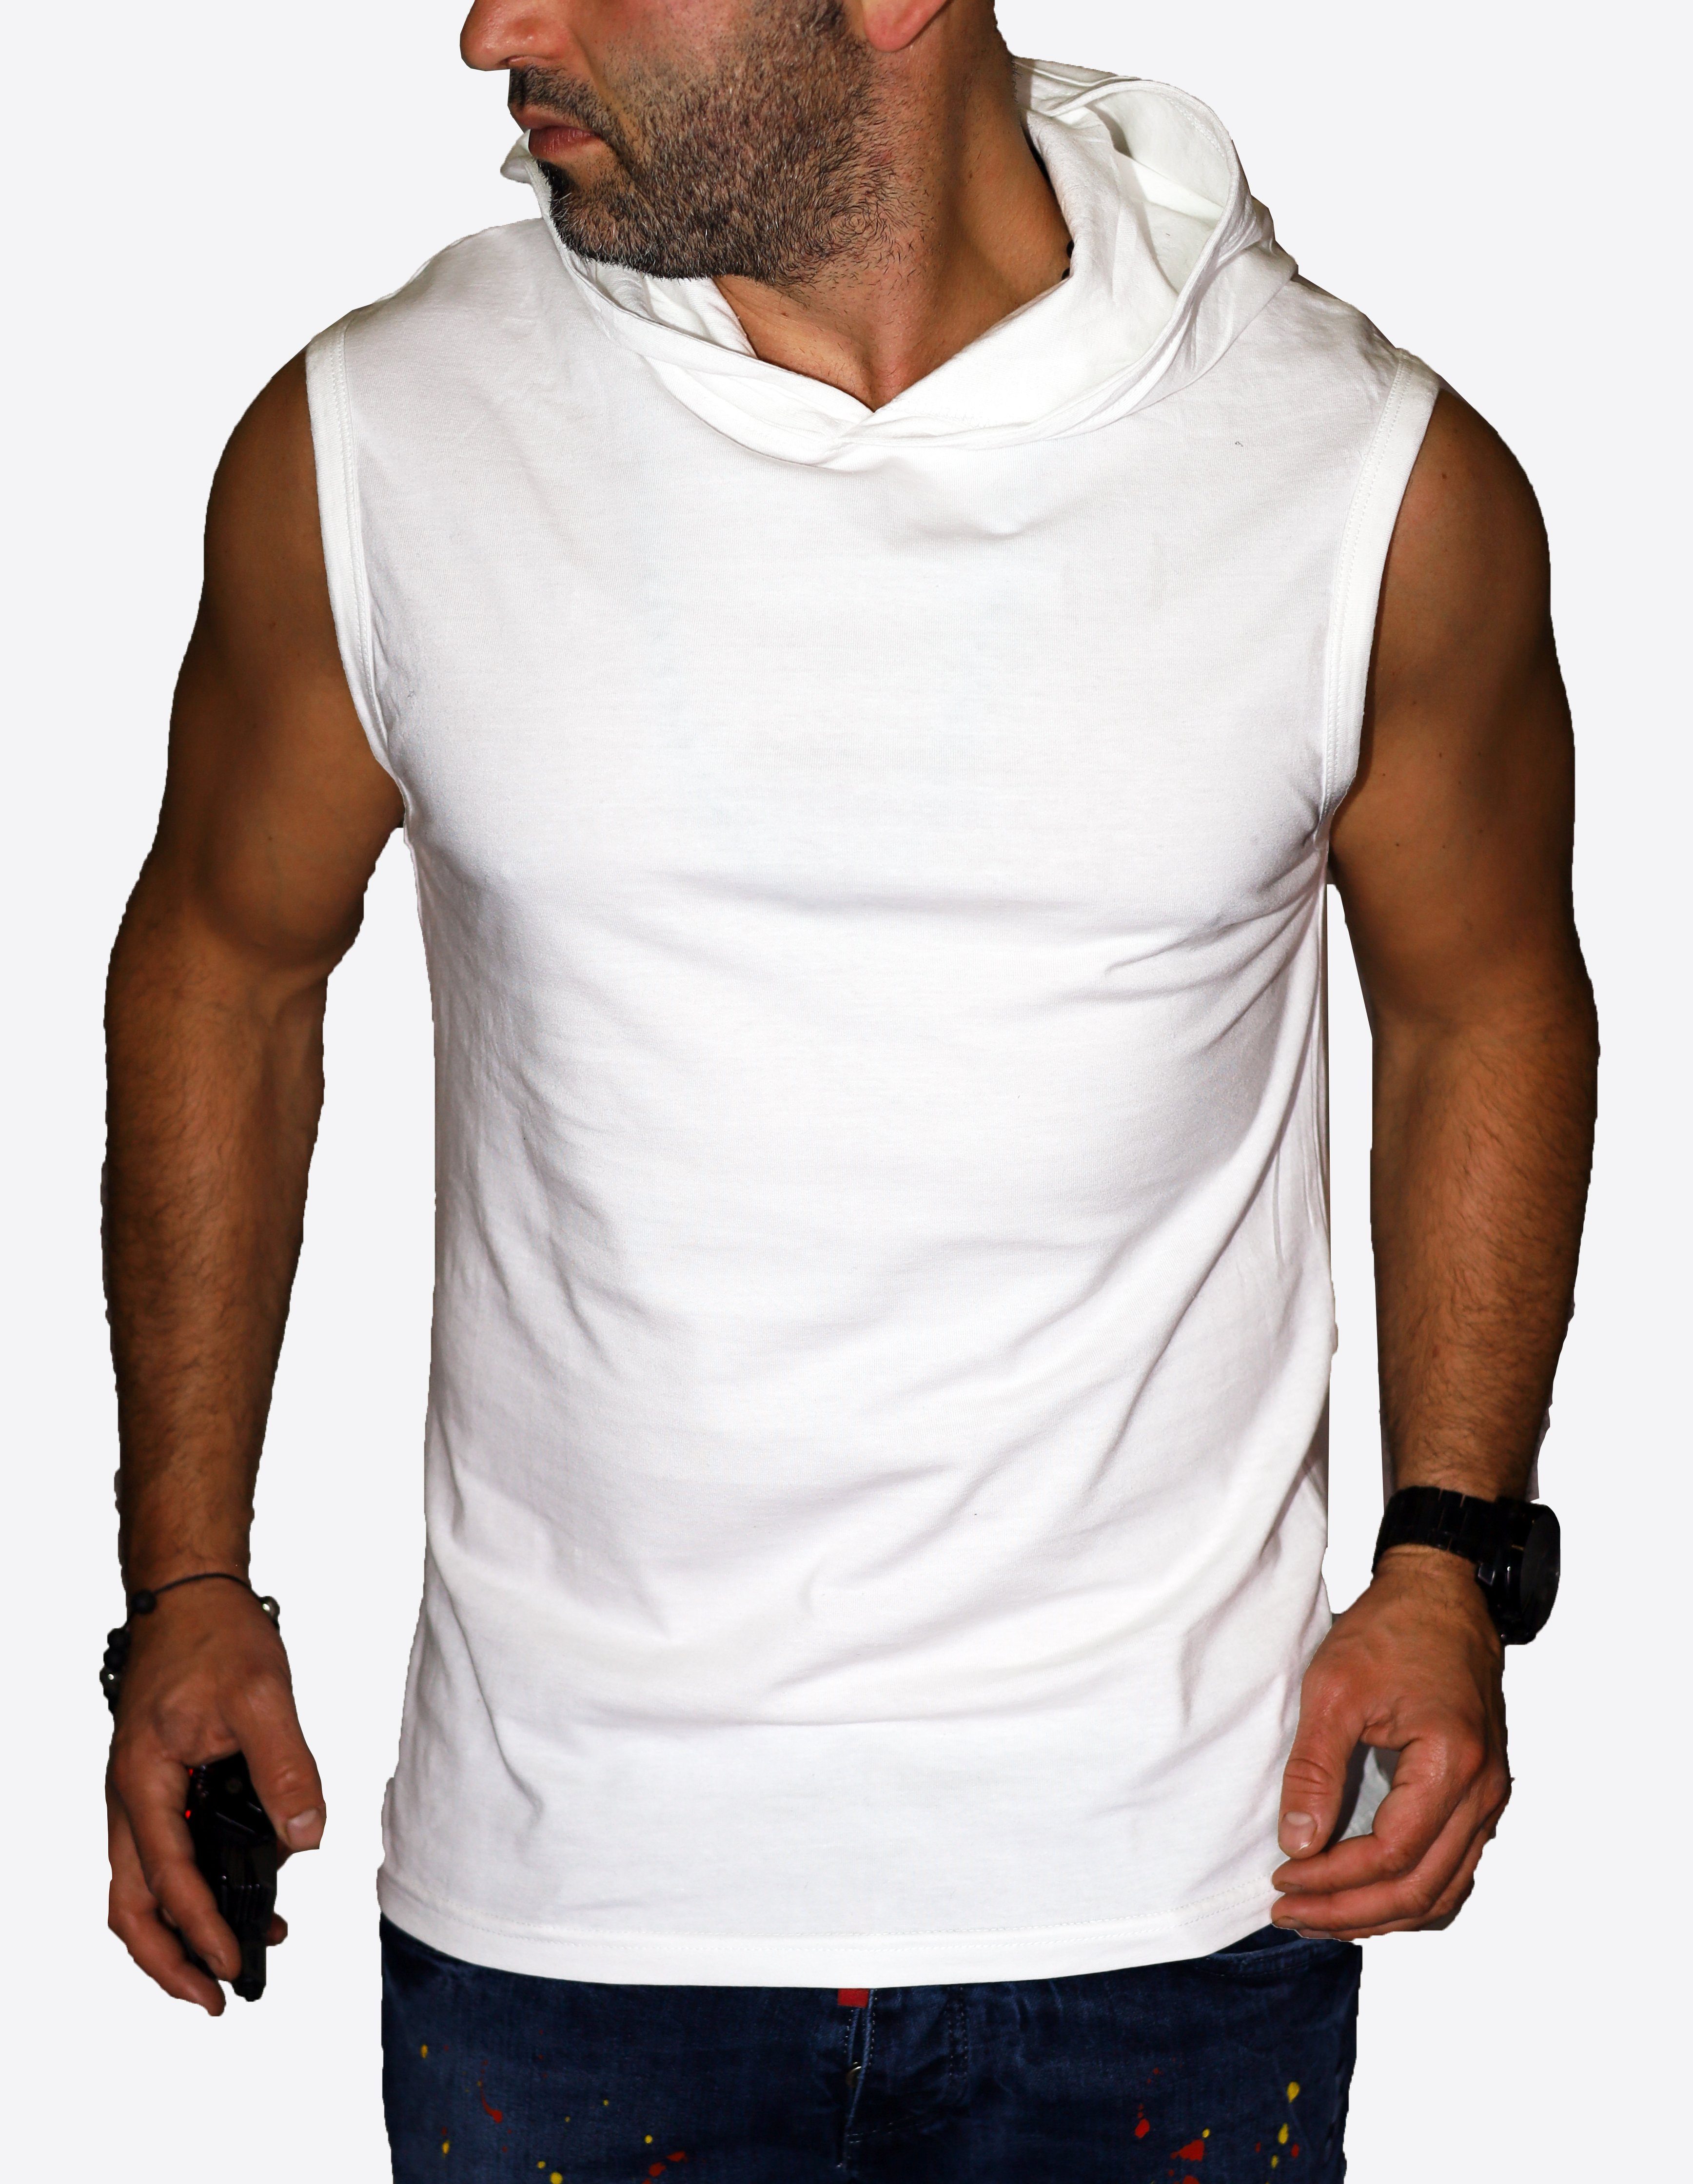 Tanktop Muskelshirt Muscleshirt RMK T-Shirt